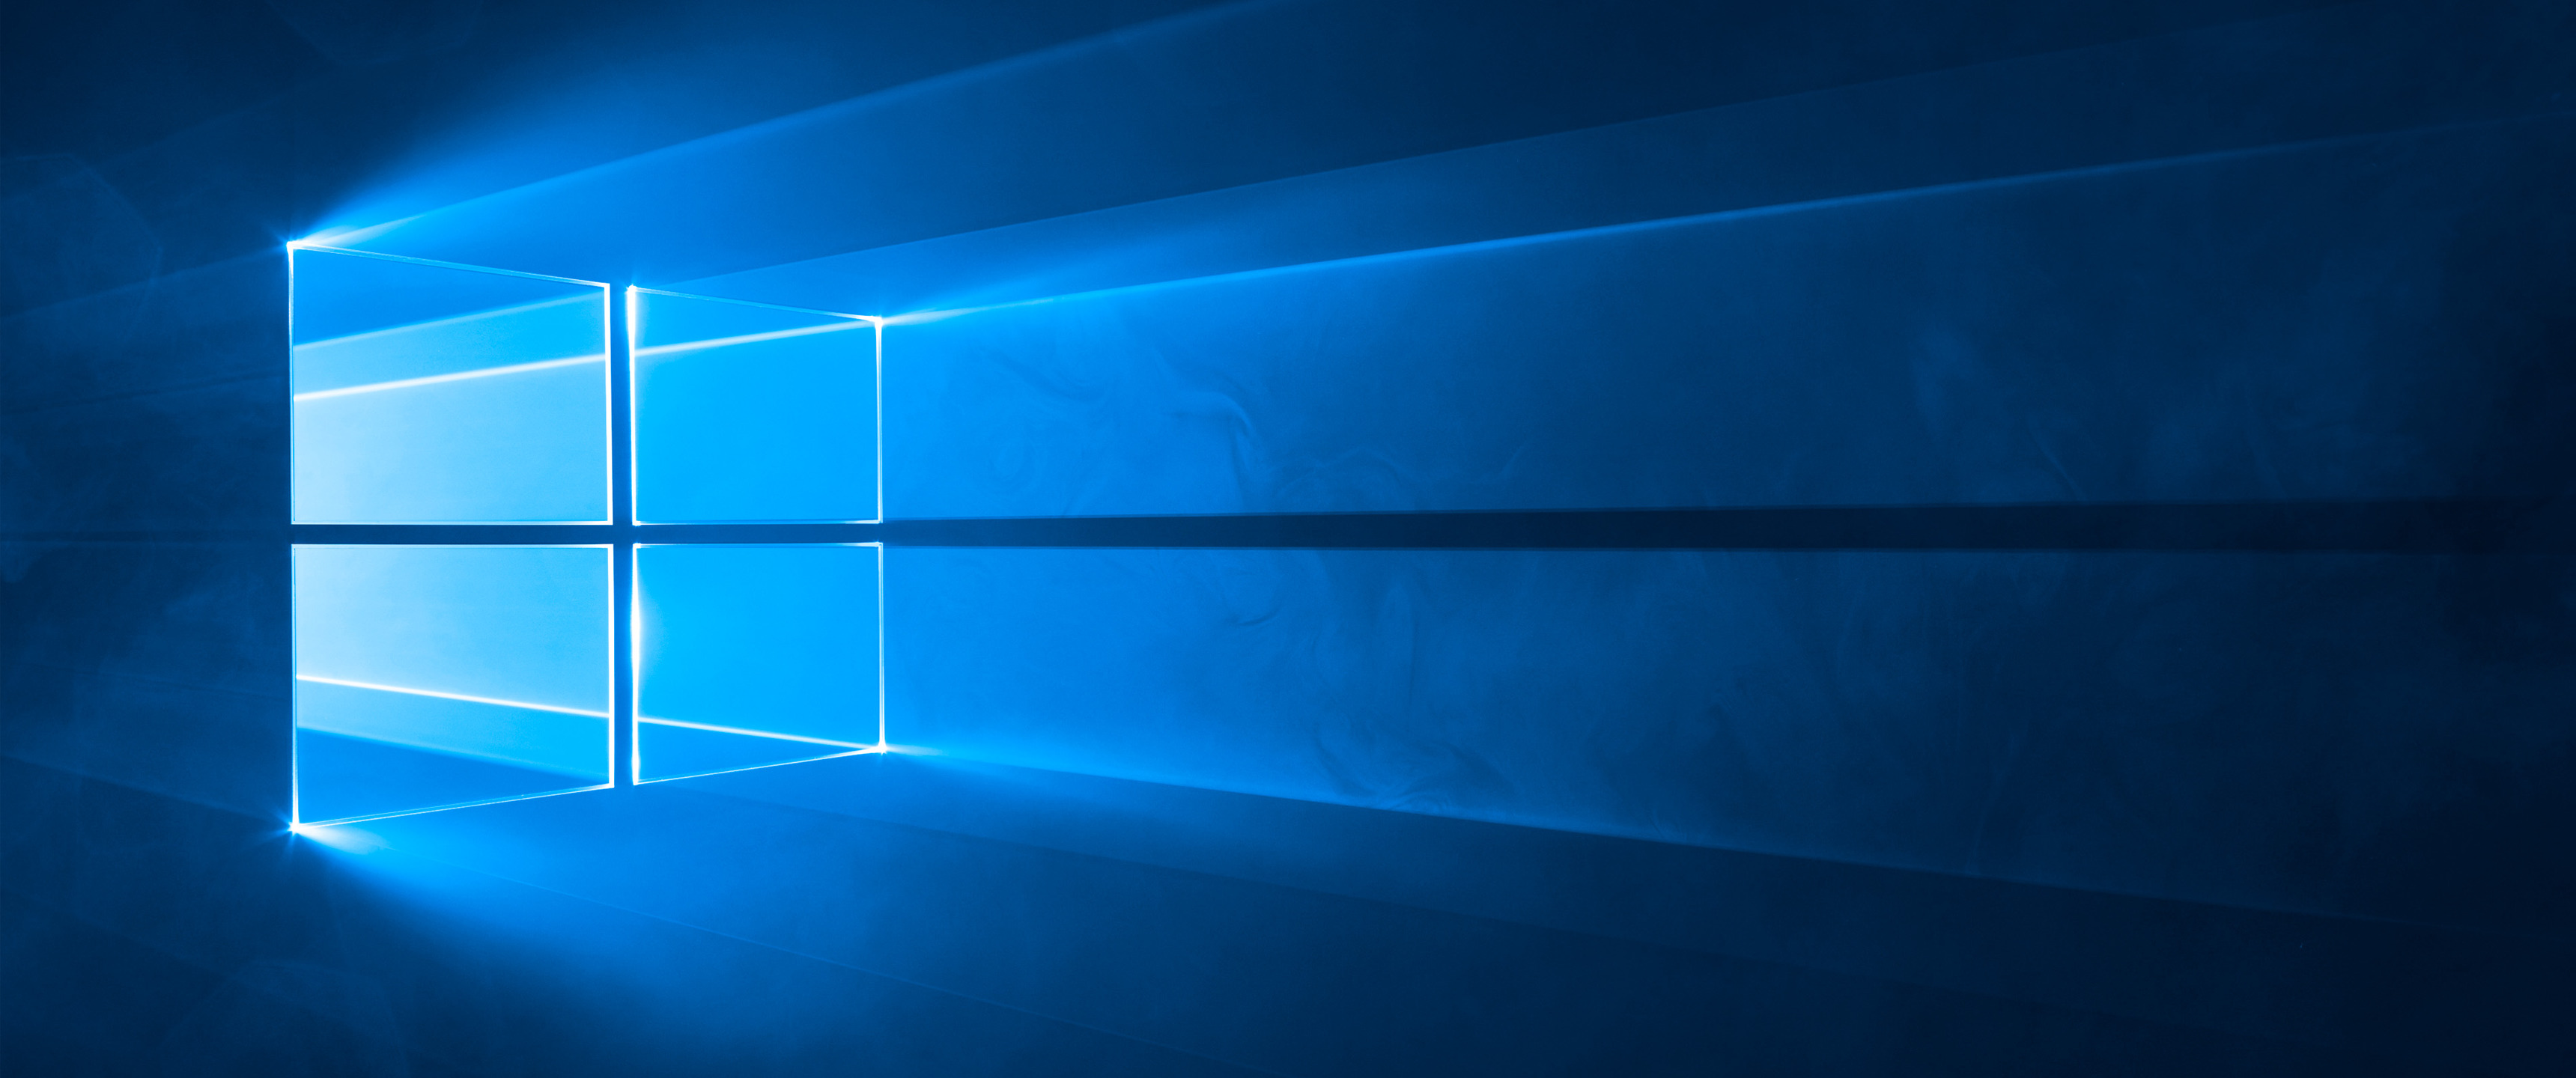 Install Windows 10 On Pc That Got Free Upgrade - renewintel